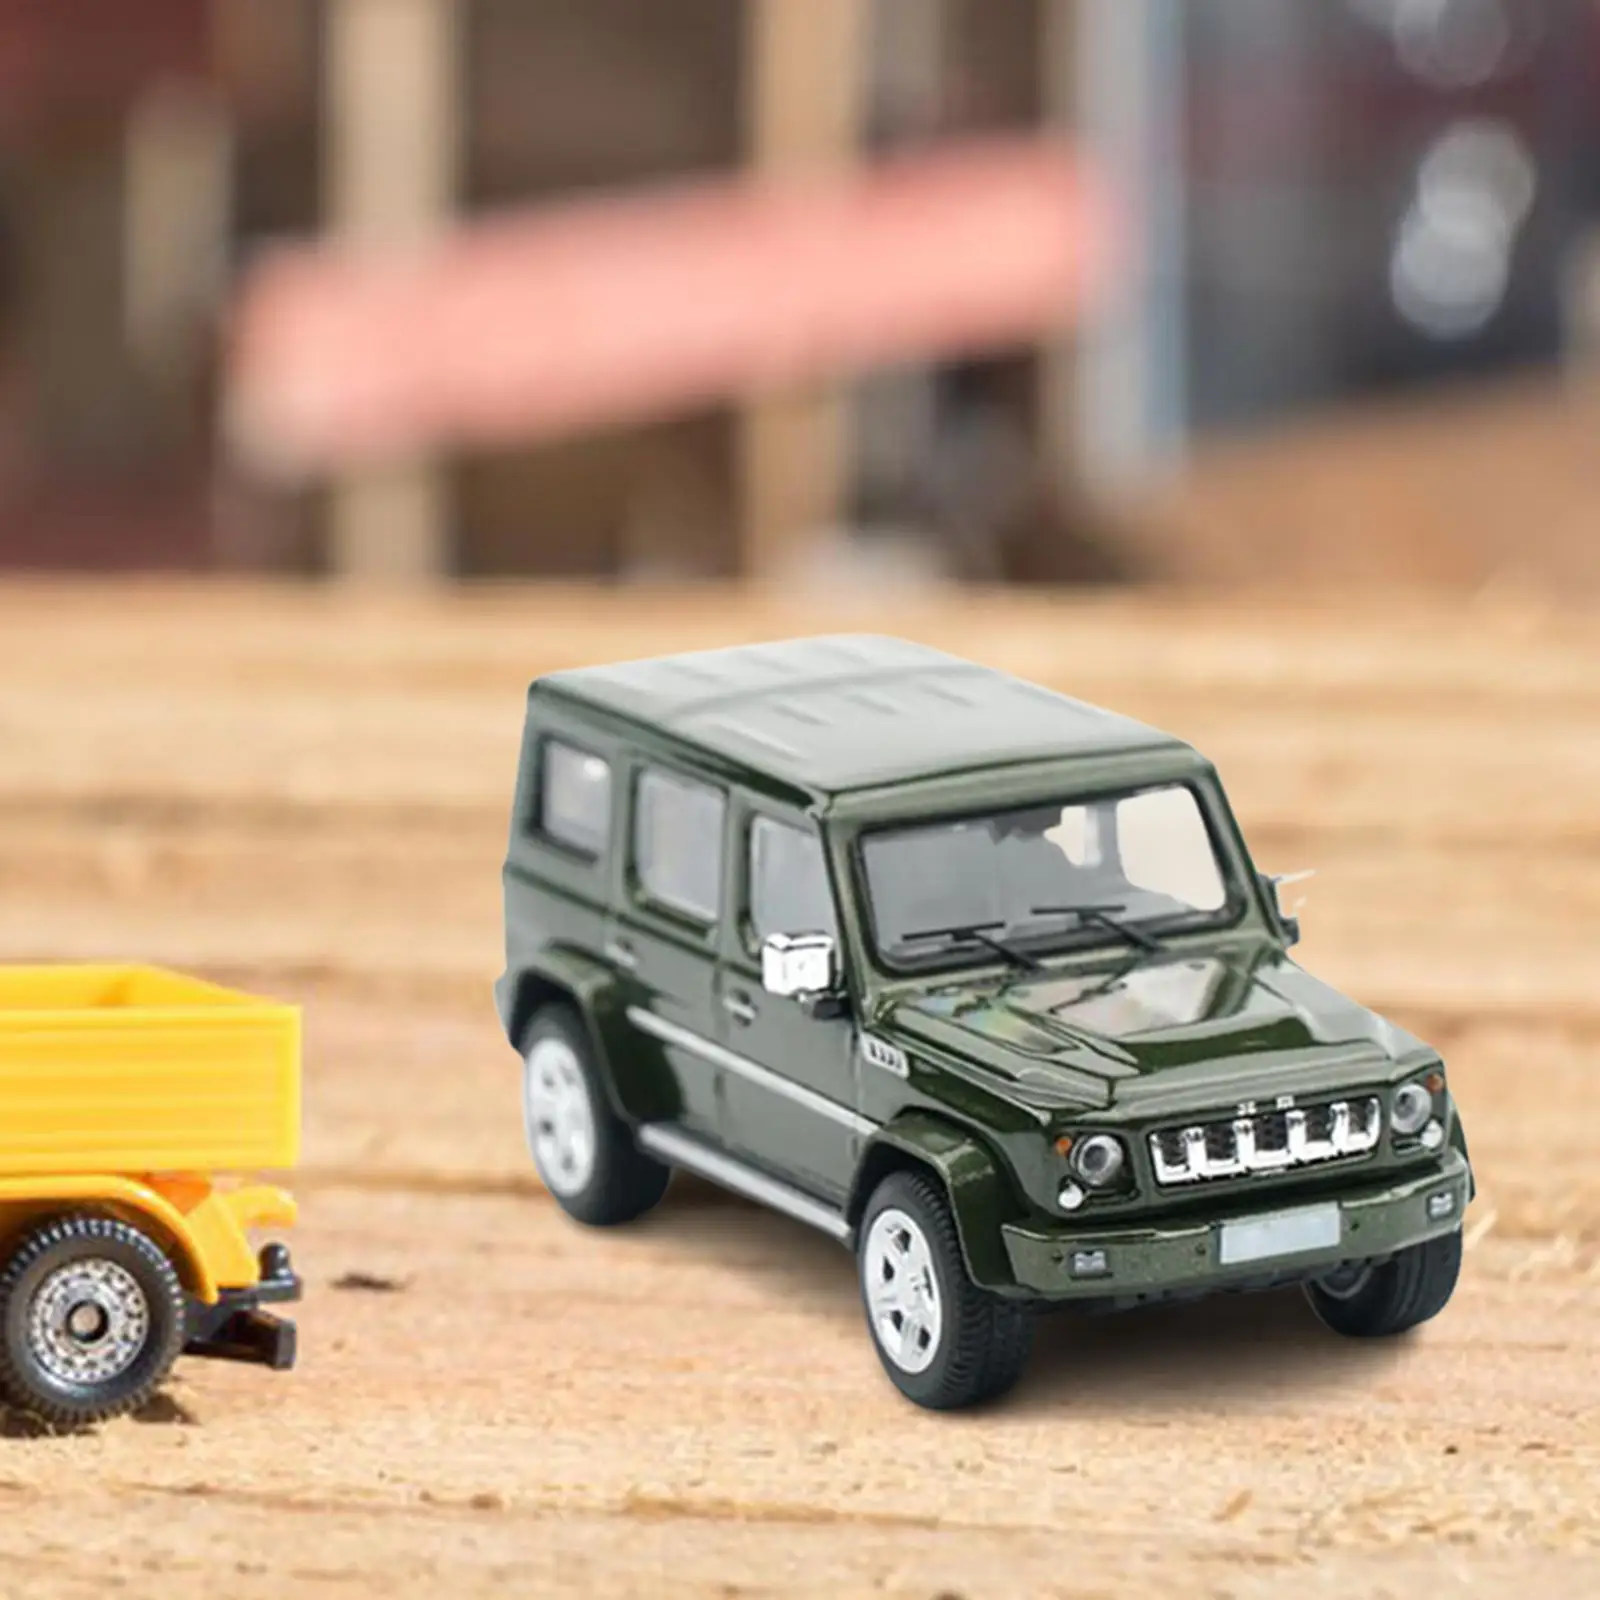 1/64 Car Model Mini Vehicles Toys for Diorama Miniature Scene Accessories